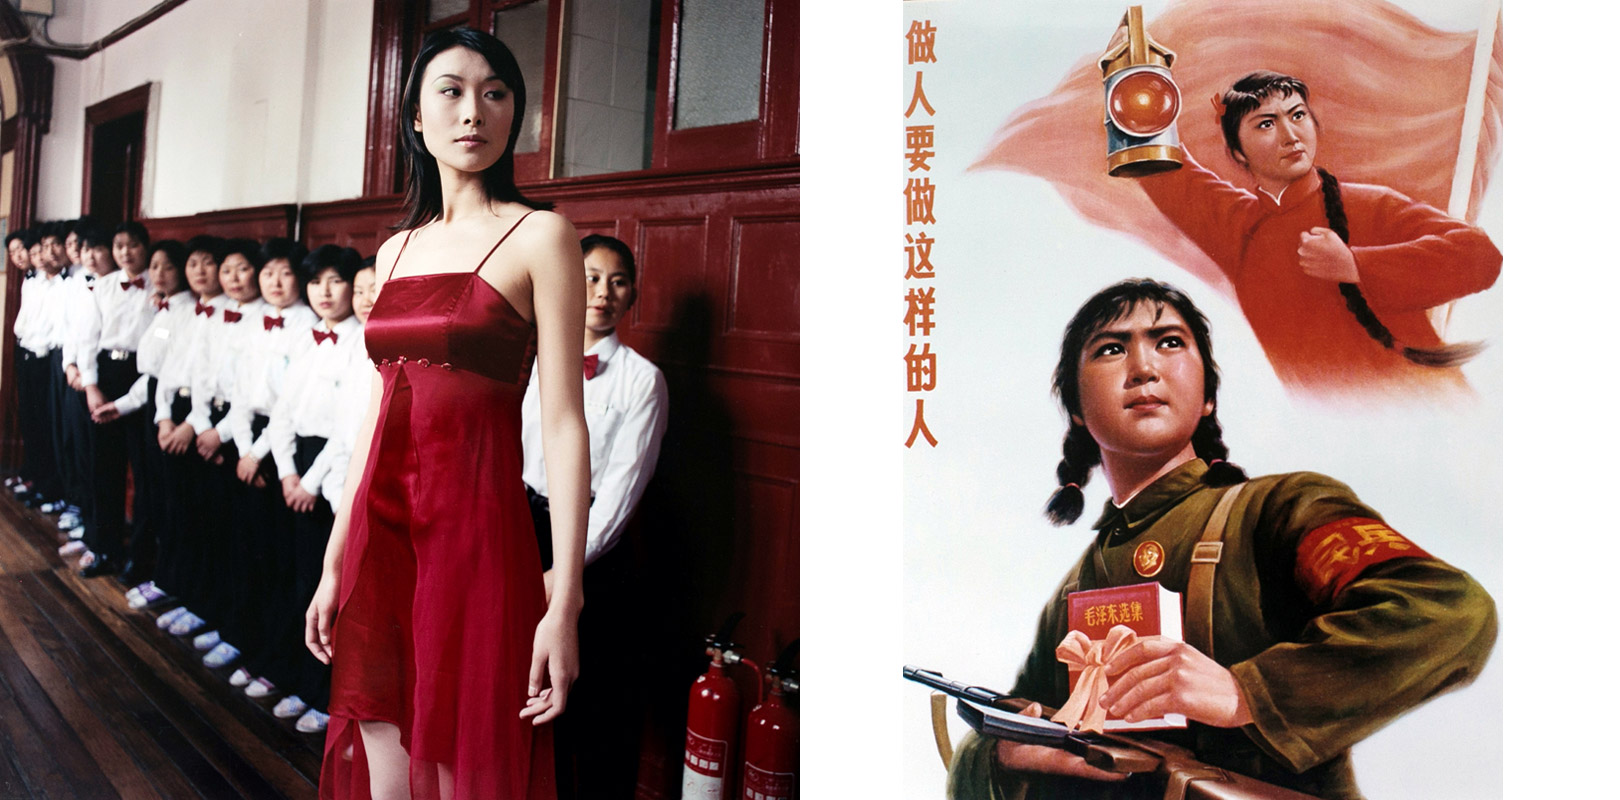 Bildpaar-Red-Girl-Propagandaplakat-Frau-mit-Gewehr